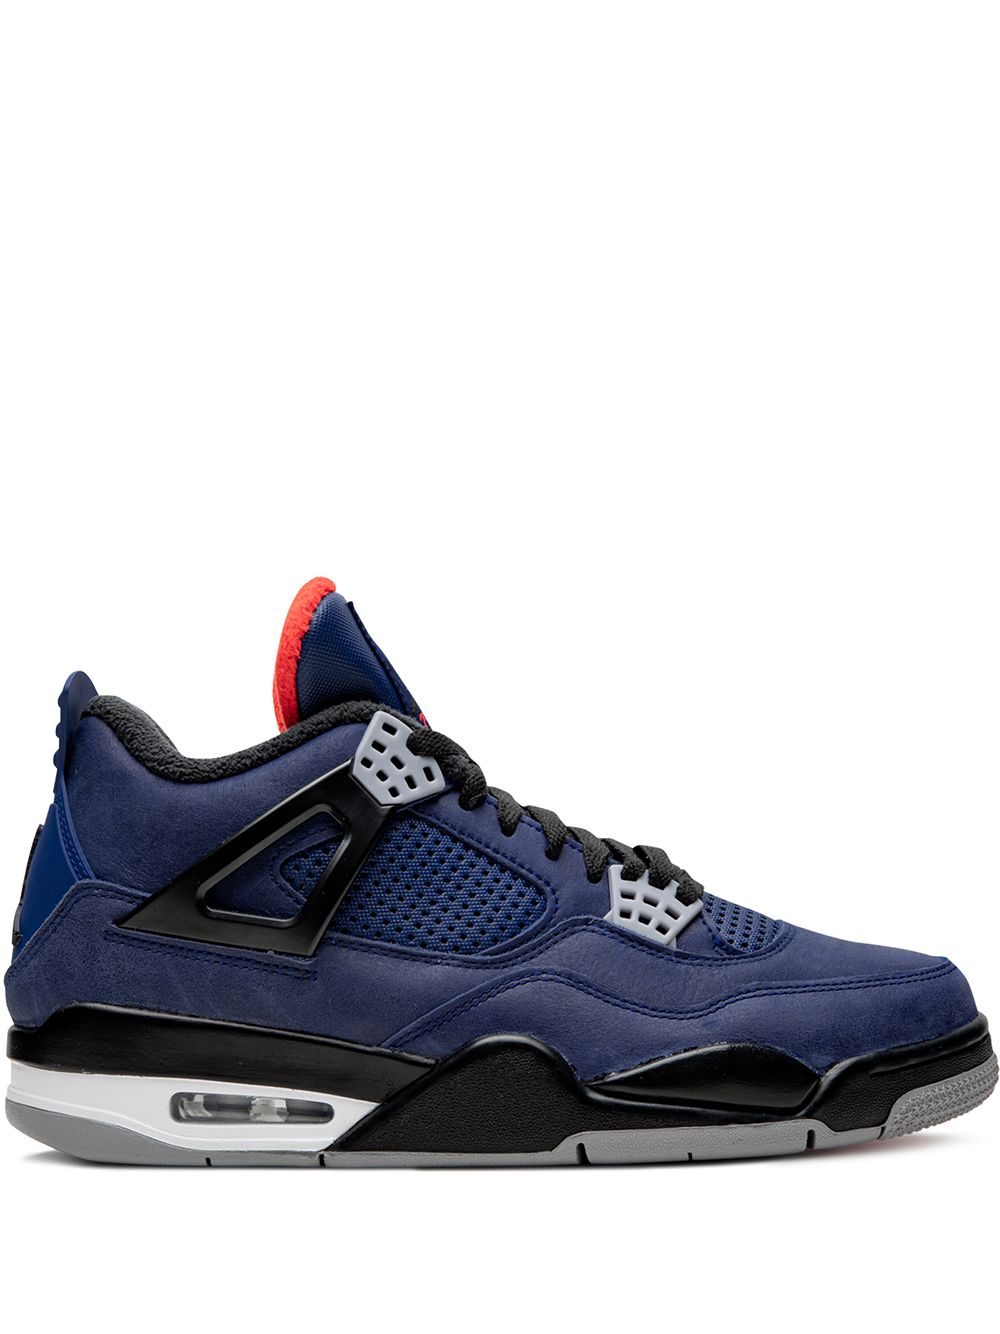 Jordan Air Jordan 4 "Winterized Loyal Blue" sneakers von Jordan